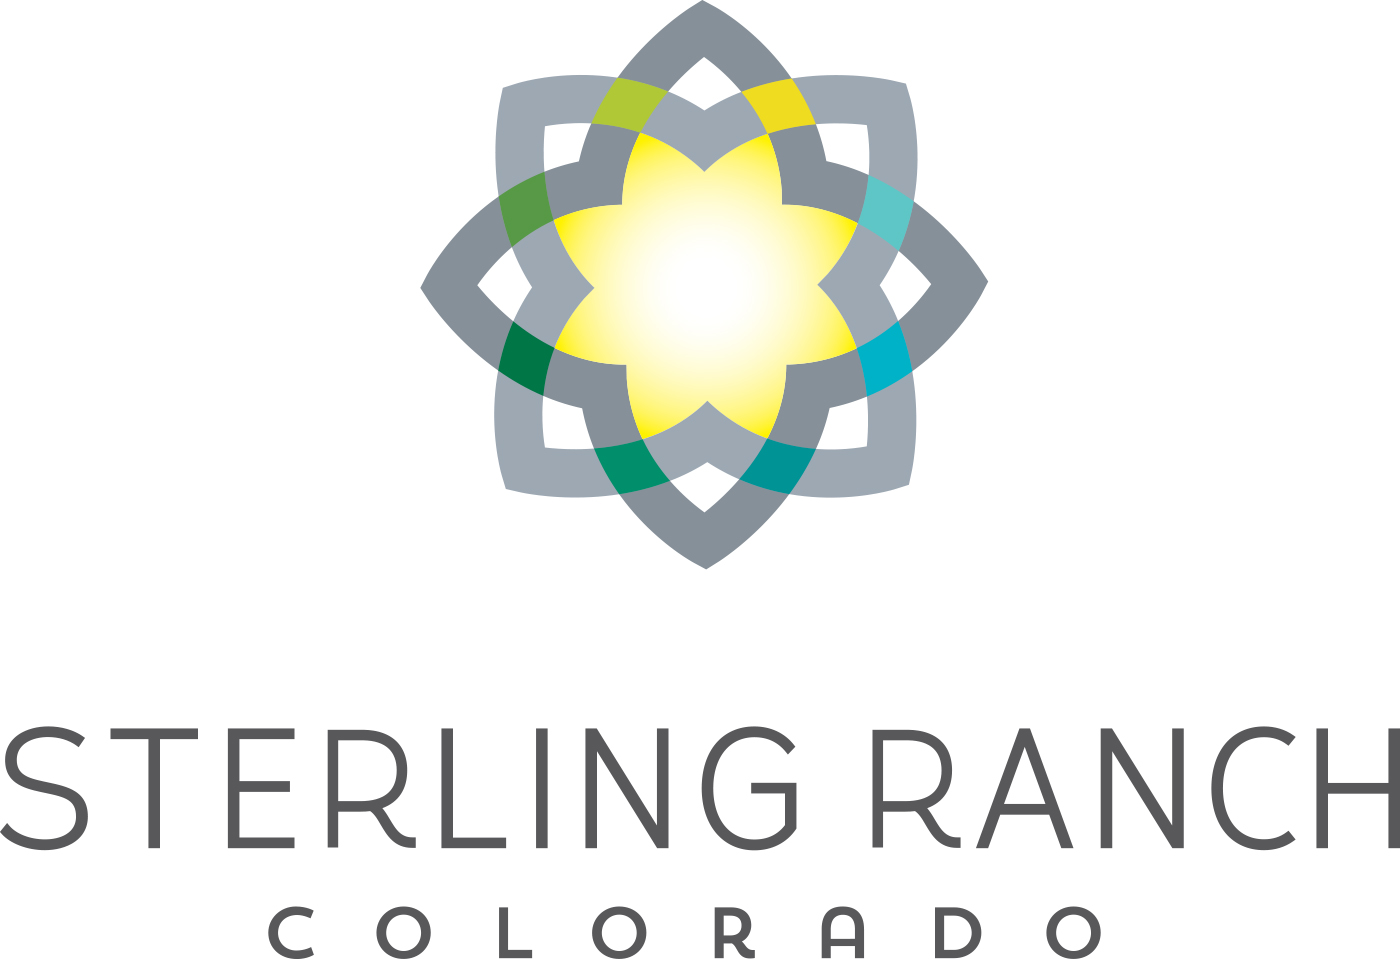 SterlingRanch_logo_4c_FINAL